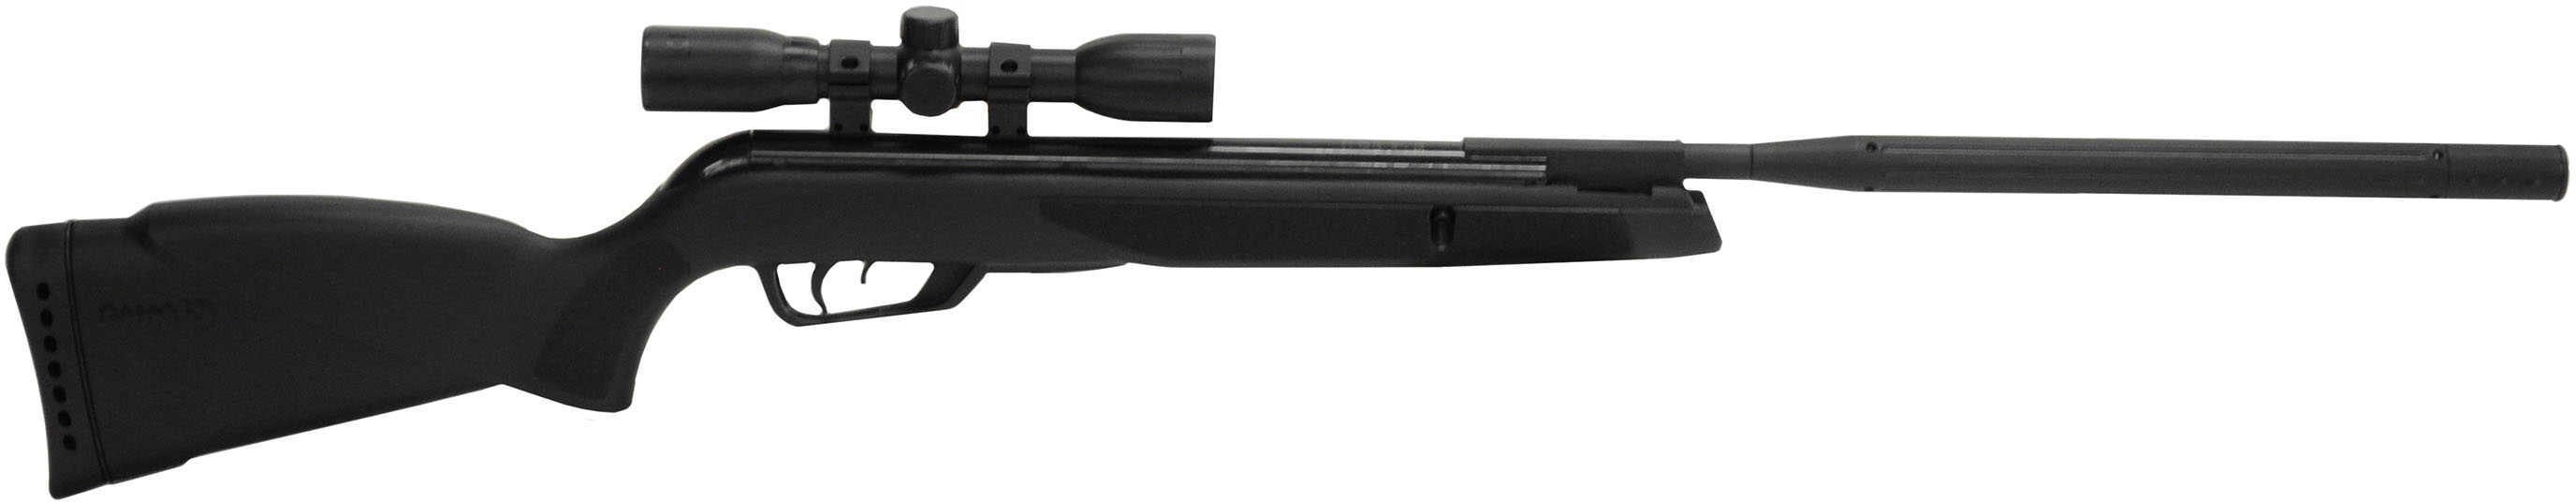 Gamo Wildcat Whisper 177 Pellet Black Finish Synthetic Stock Noise Dampening Technology 4x32 Scope Single Shot